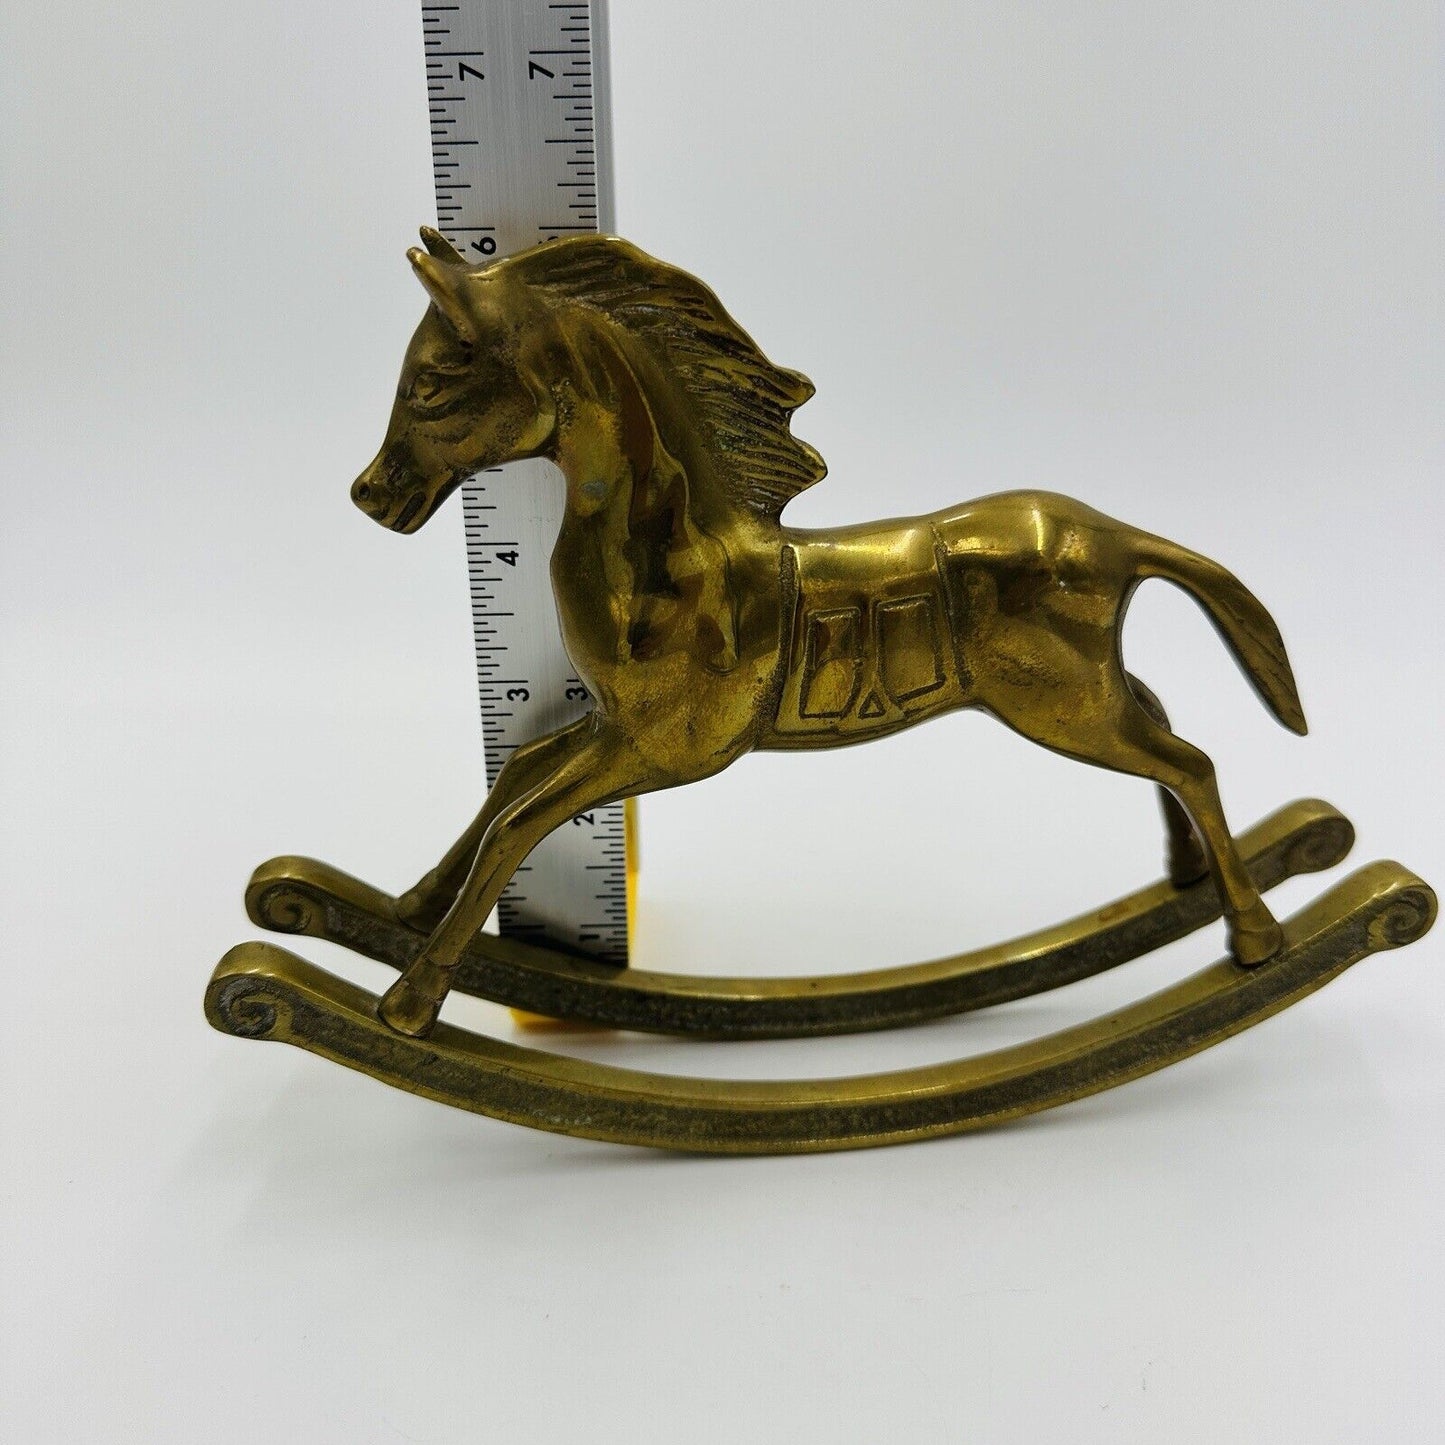 Vintage Solid Brass Rocking Horse Figurine Tail Down Paperweight sculpture